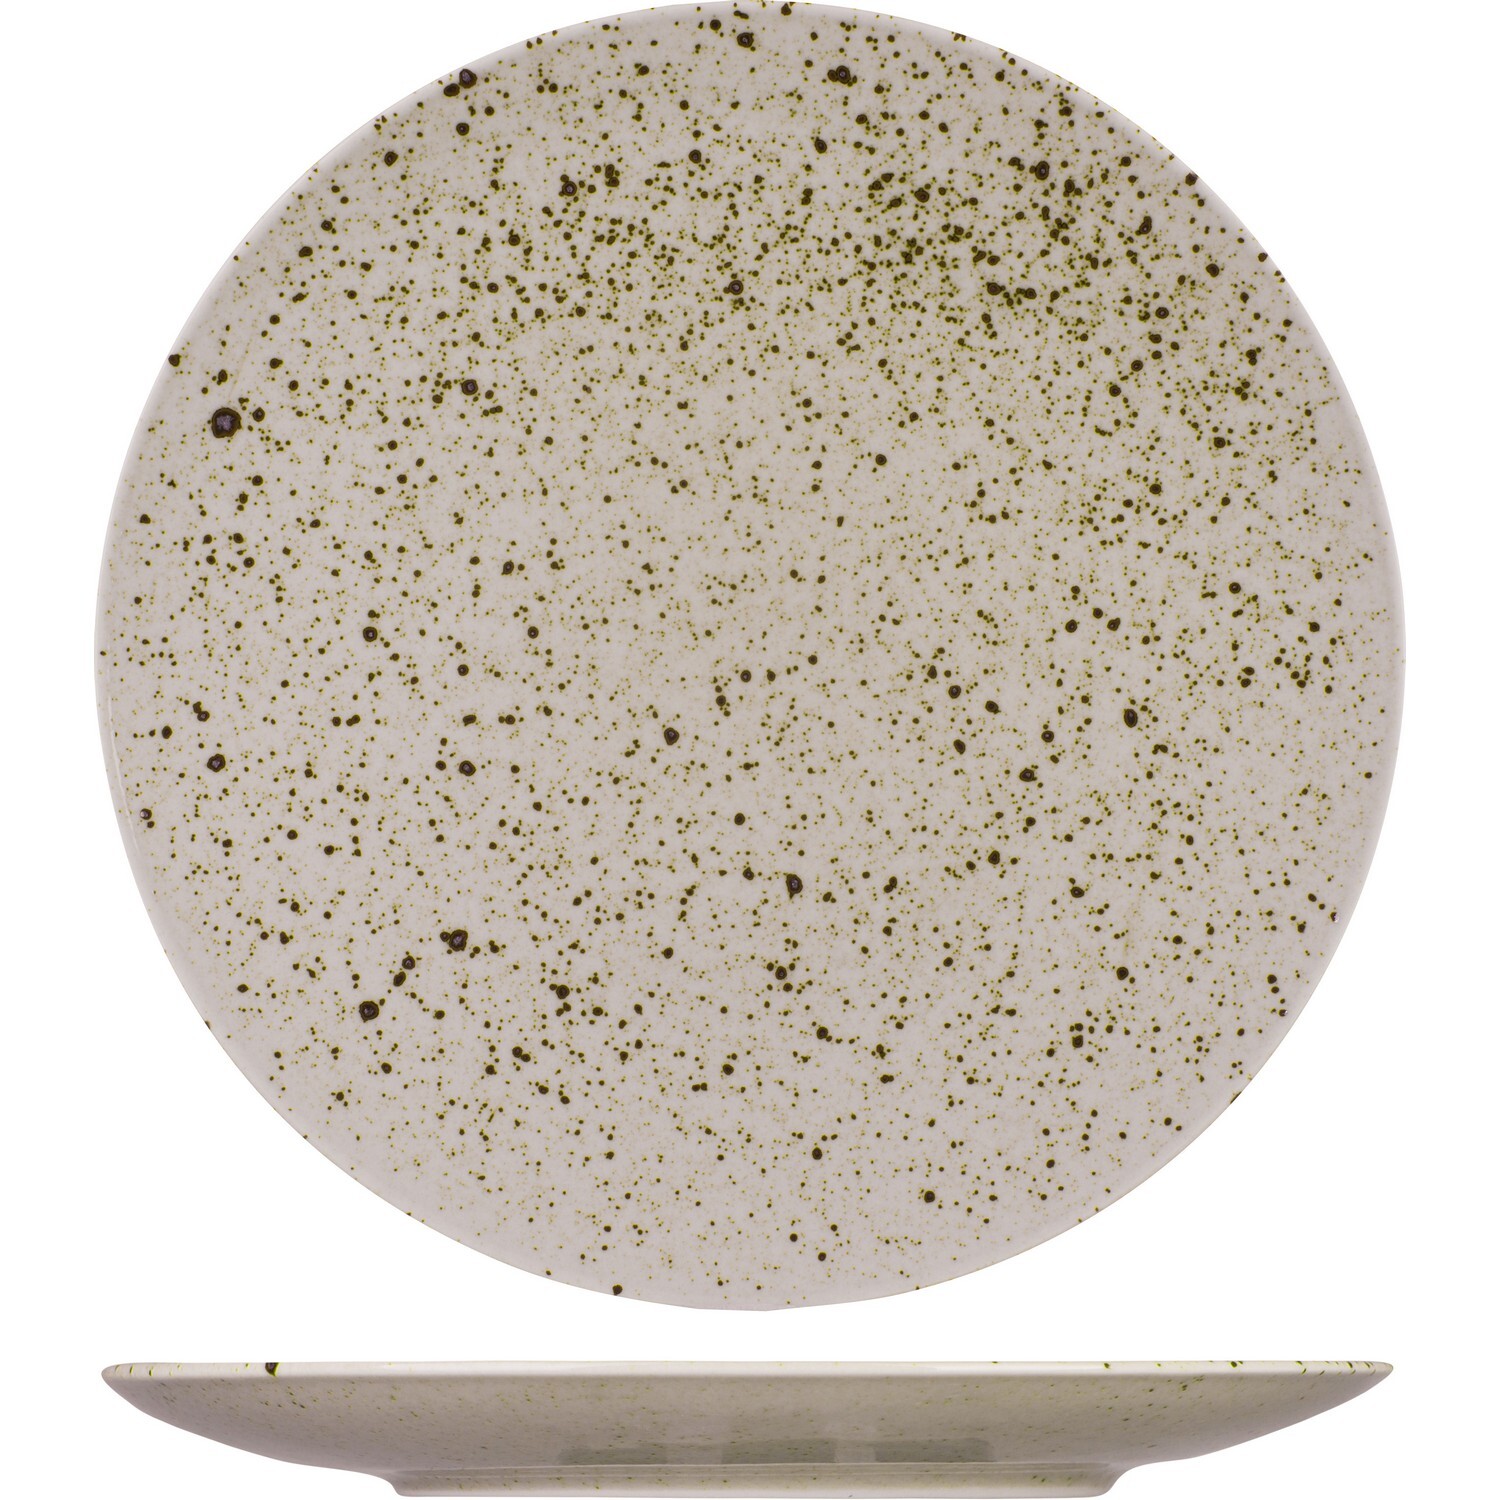 Тарелка Lilien Austria Лайфстиль для пиццы 300х300х25мм, фарфор, песочный